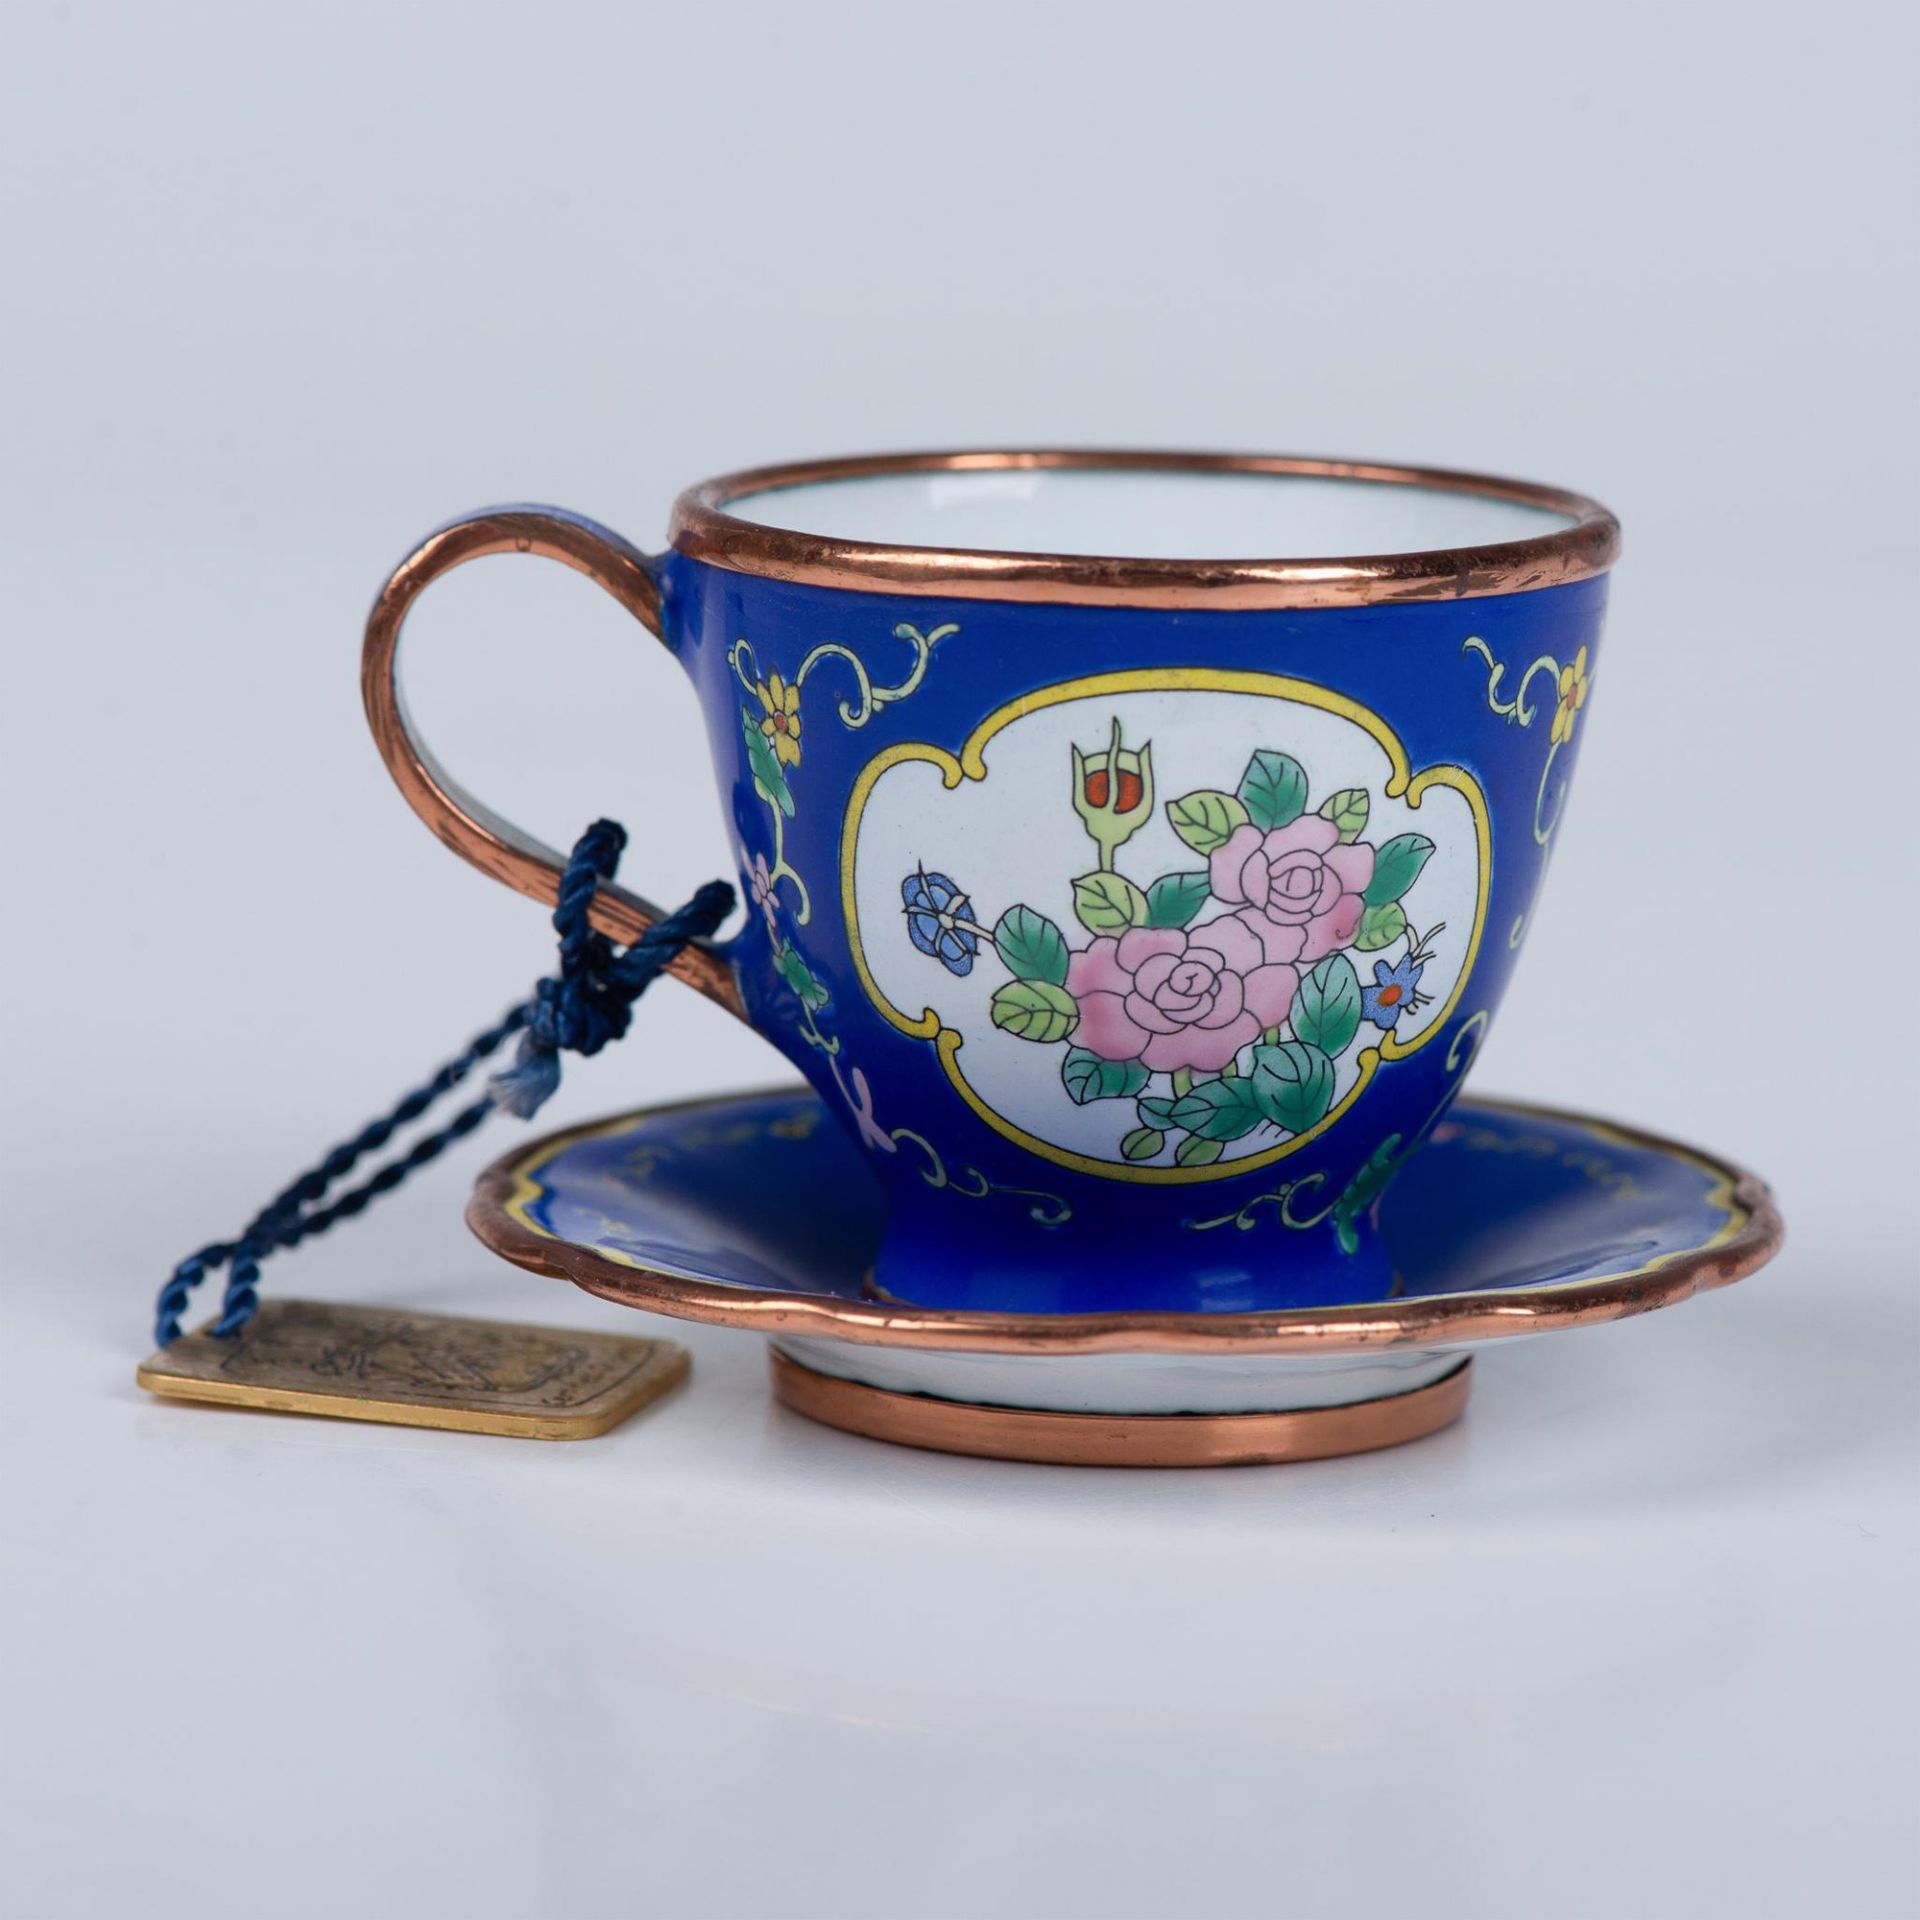 2pc Charlotte di Vita Miniature Teacup and Saucer - Image 2 of 6